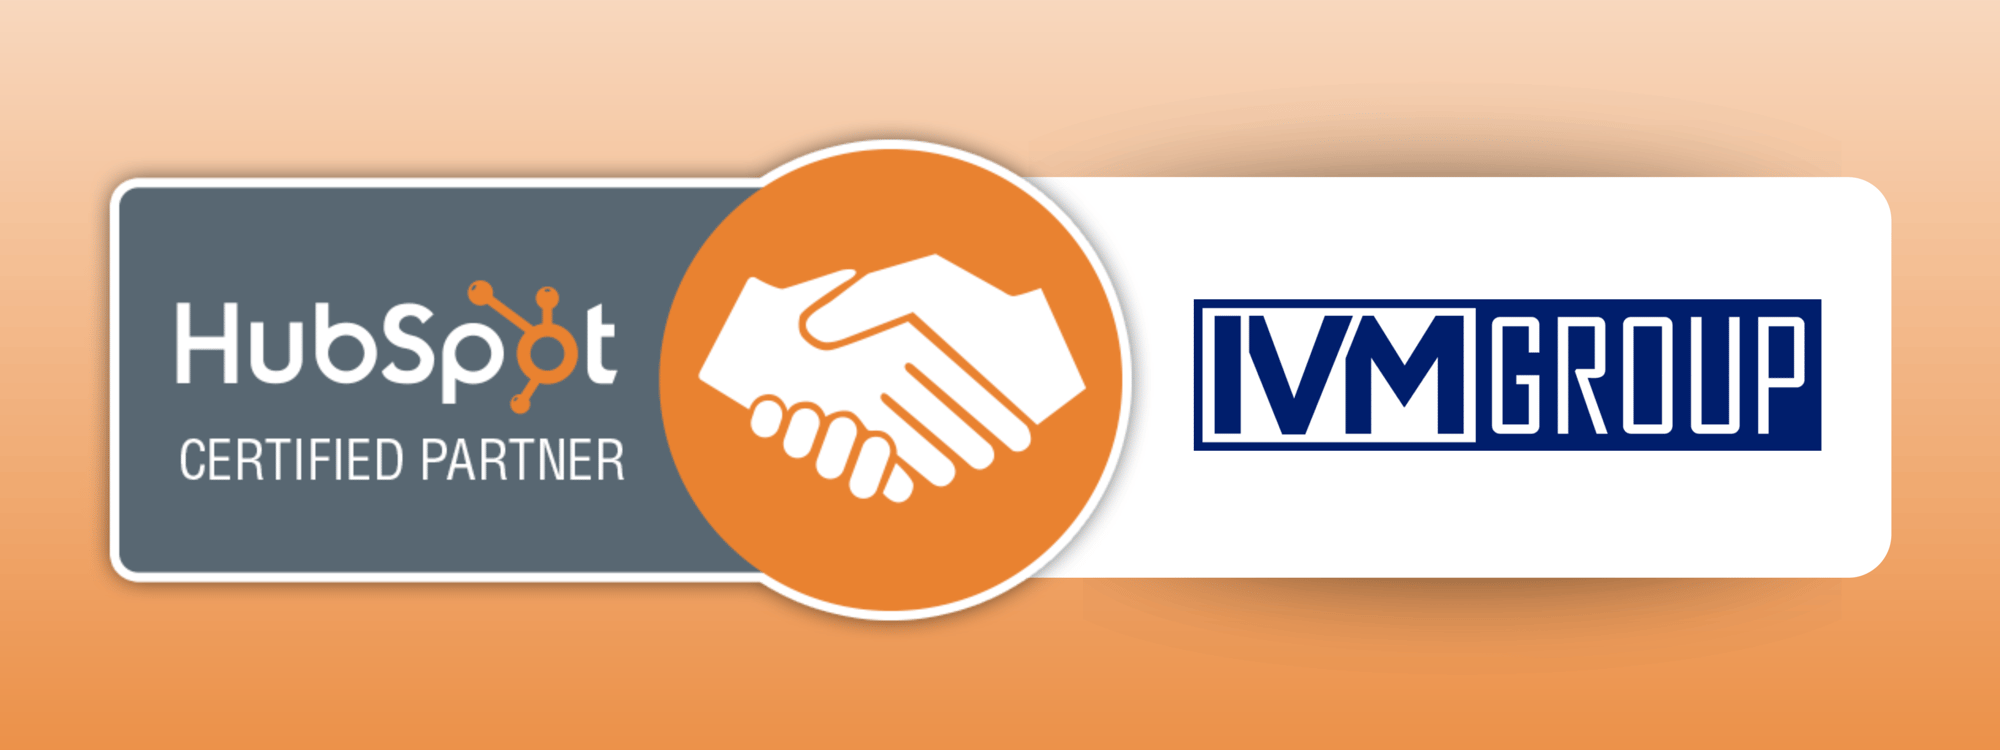 IVM Group is a certified HubSpot partner.